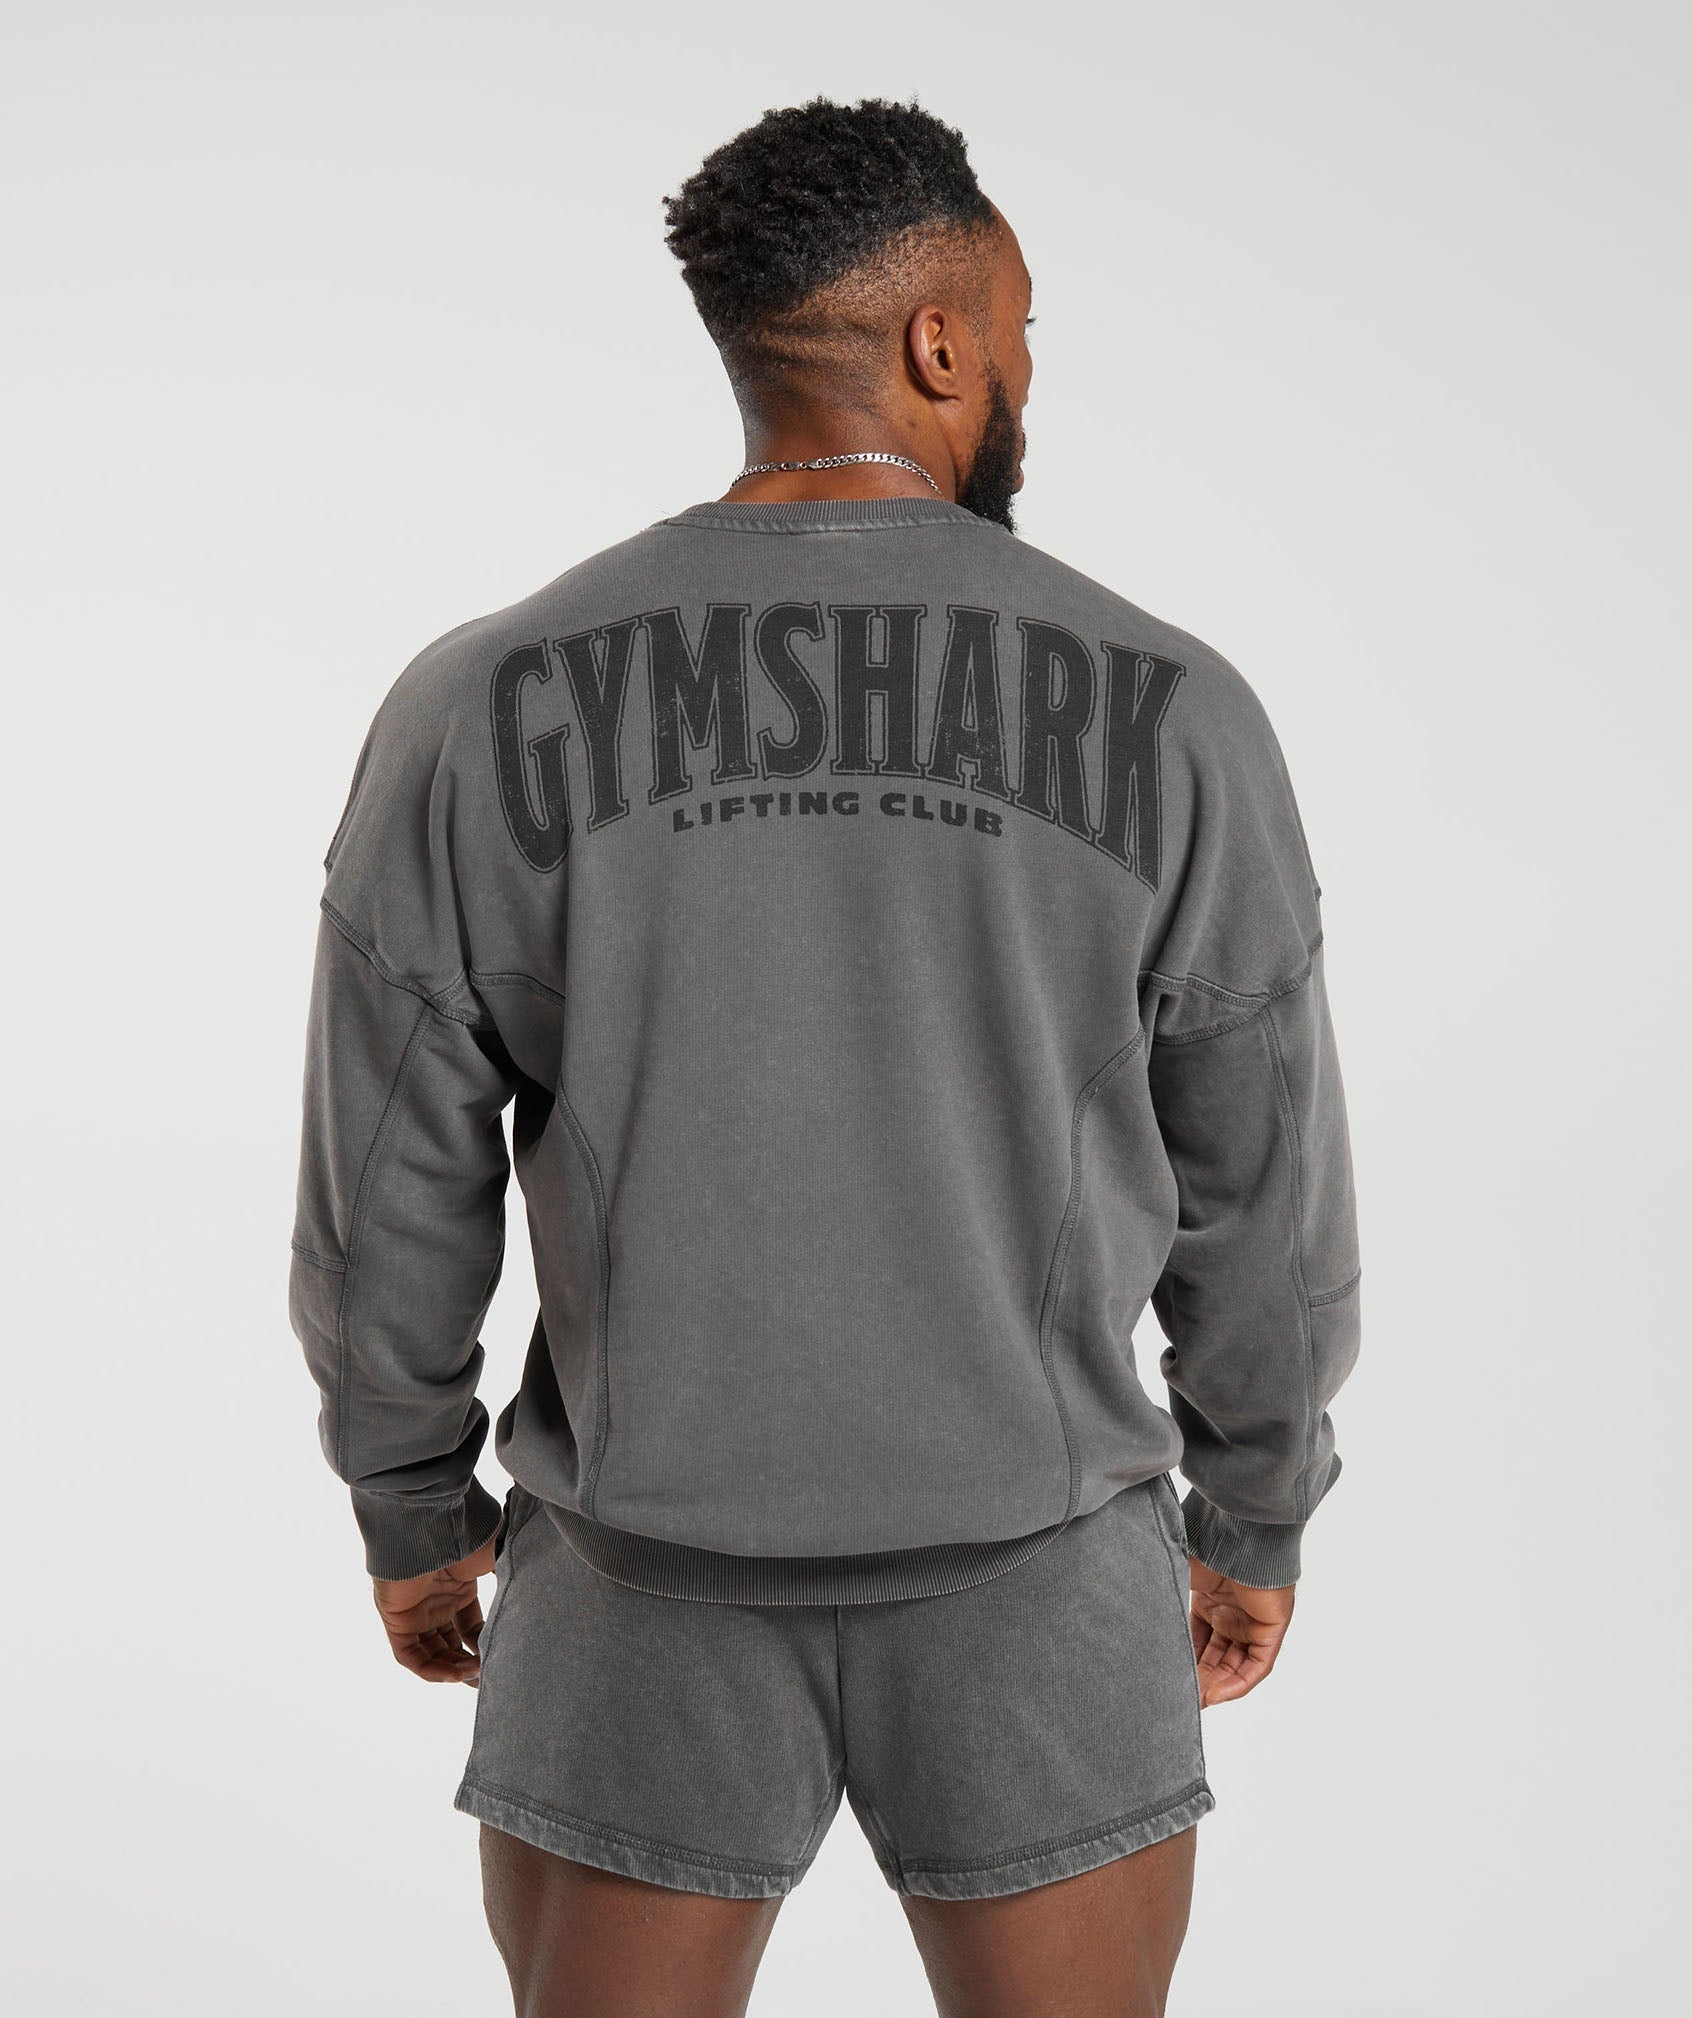 FitGear Sporting & Gym Apparels - PRICE: $3,900 ‼️ GYMSHARK